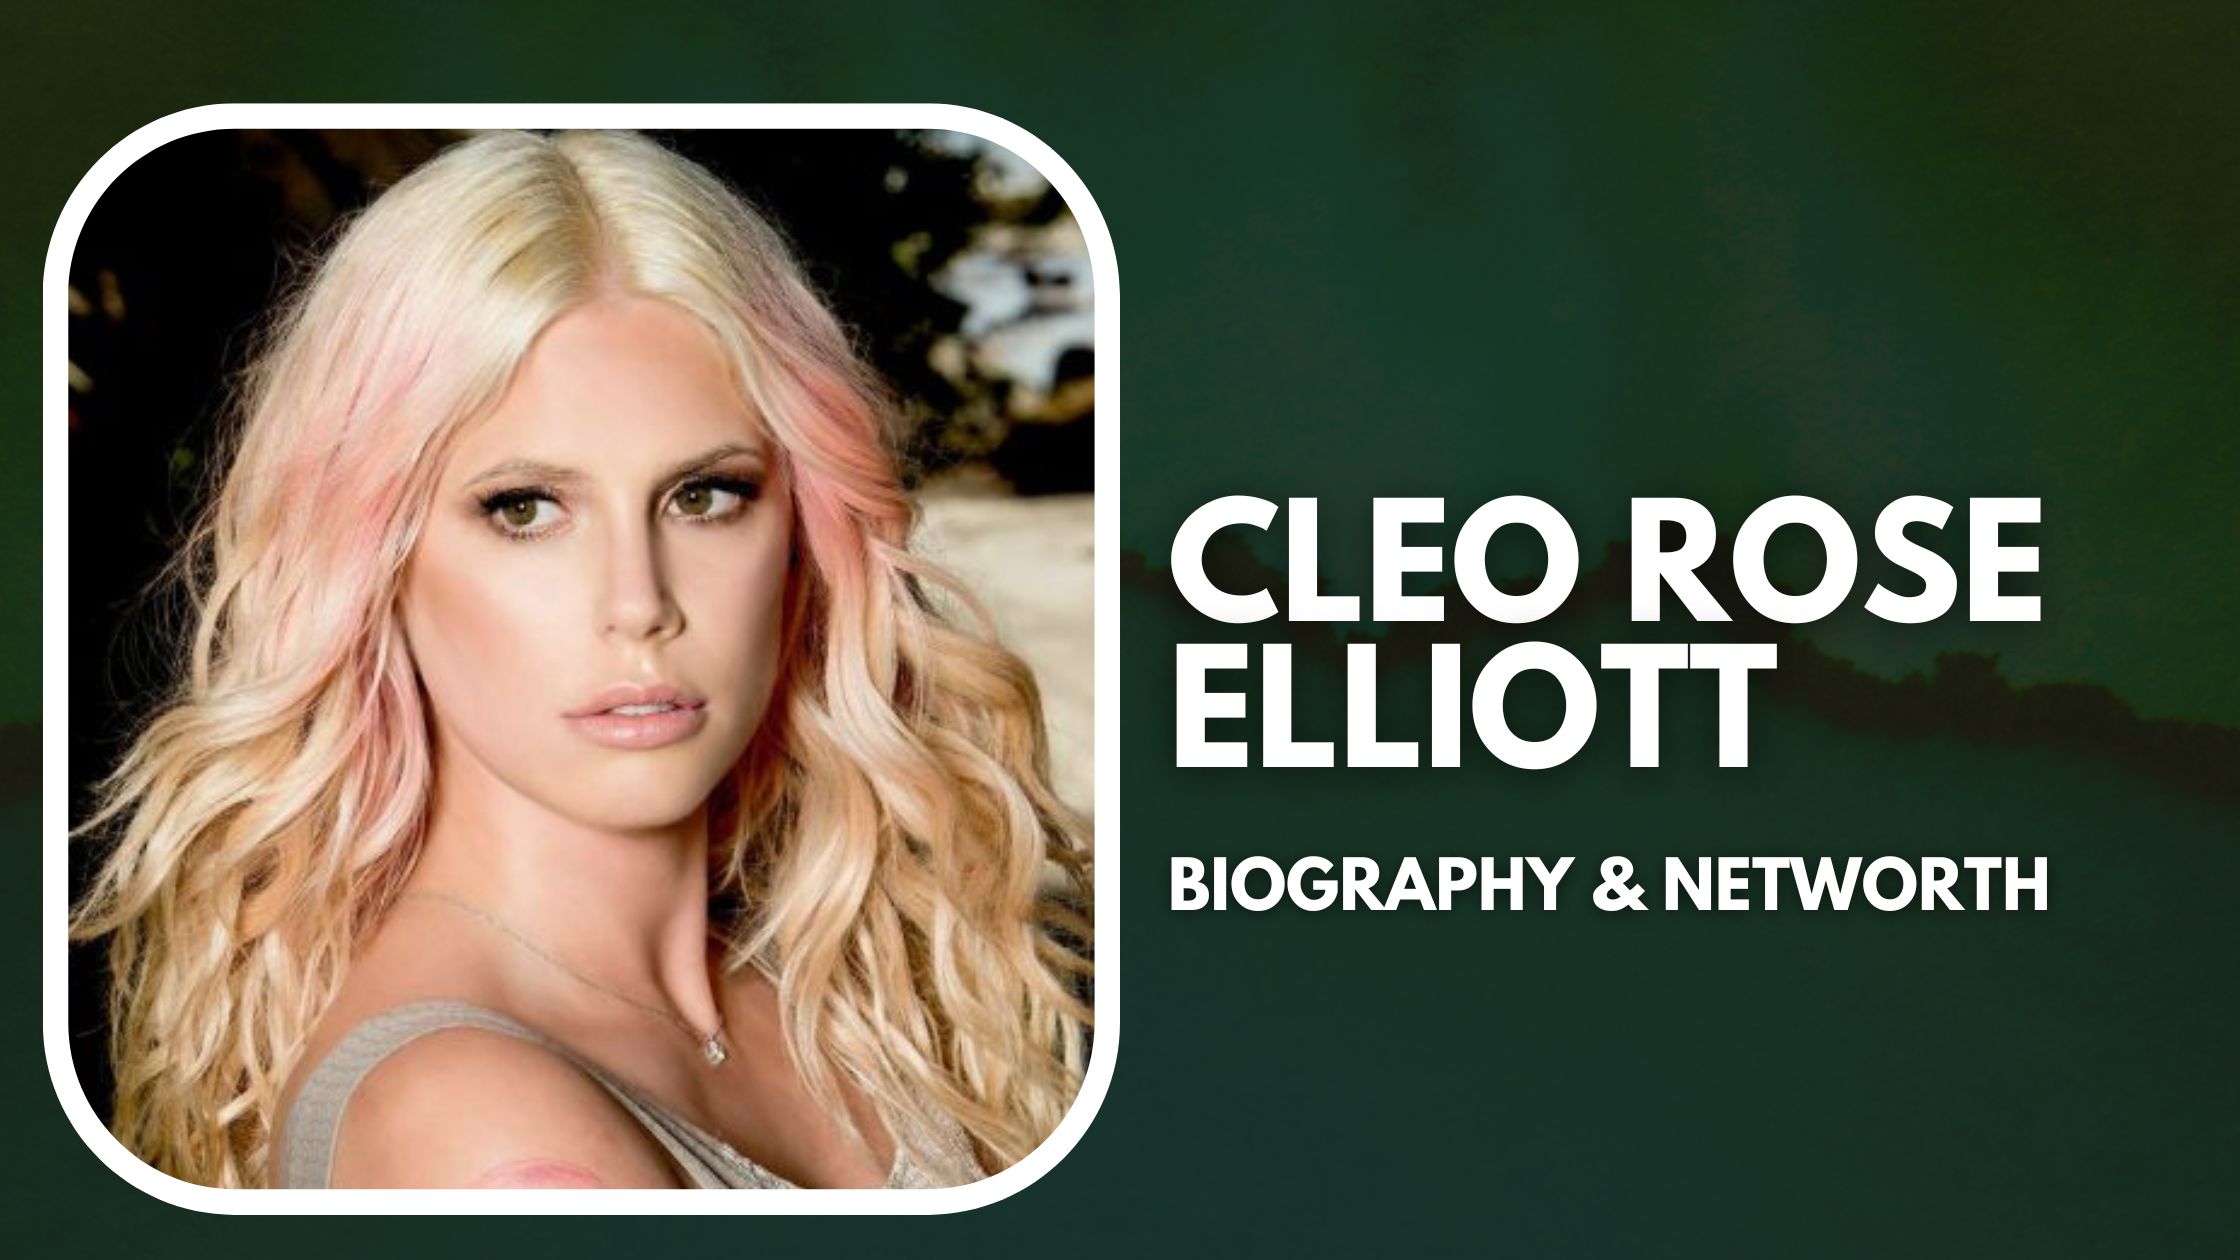 Cleo Rose Elliott Biography & Networth